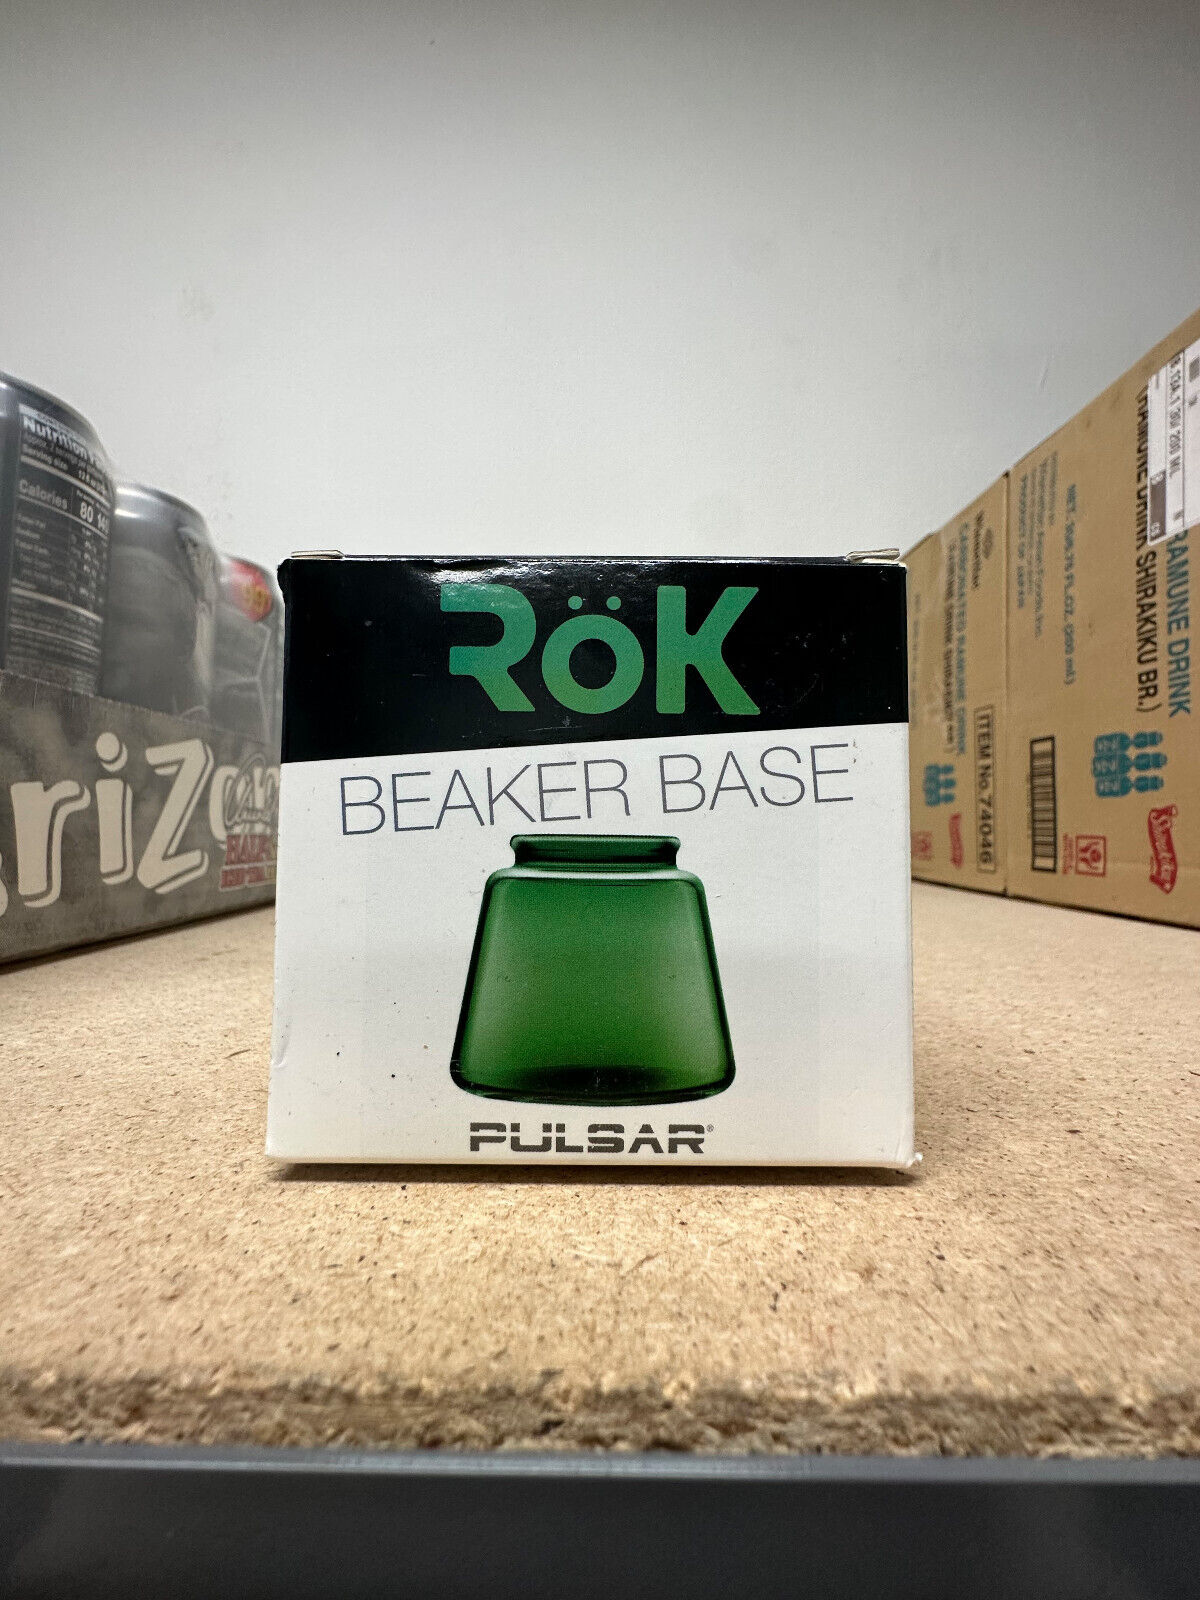  Brand New Pulsar RöK Beaker Base. Vibrant Green Color- Certified Pulsar Product